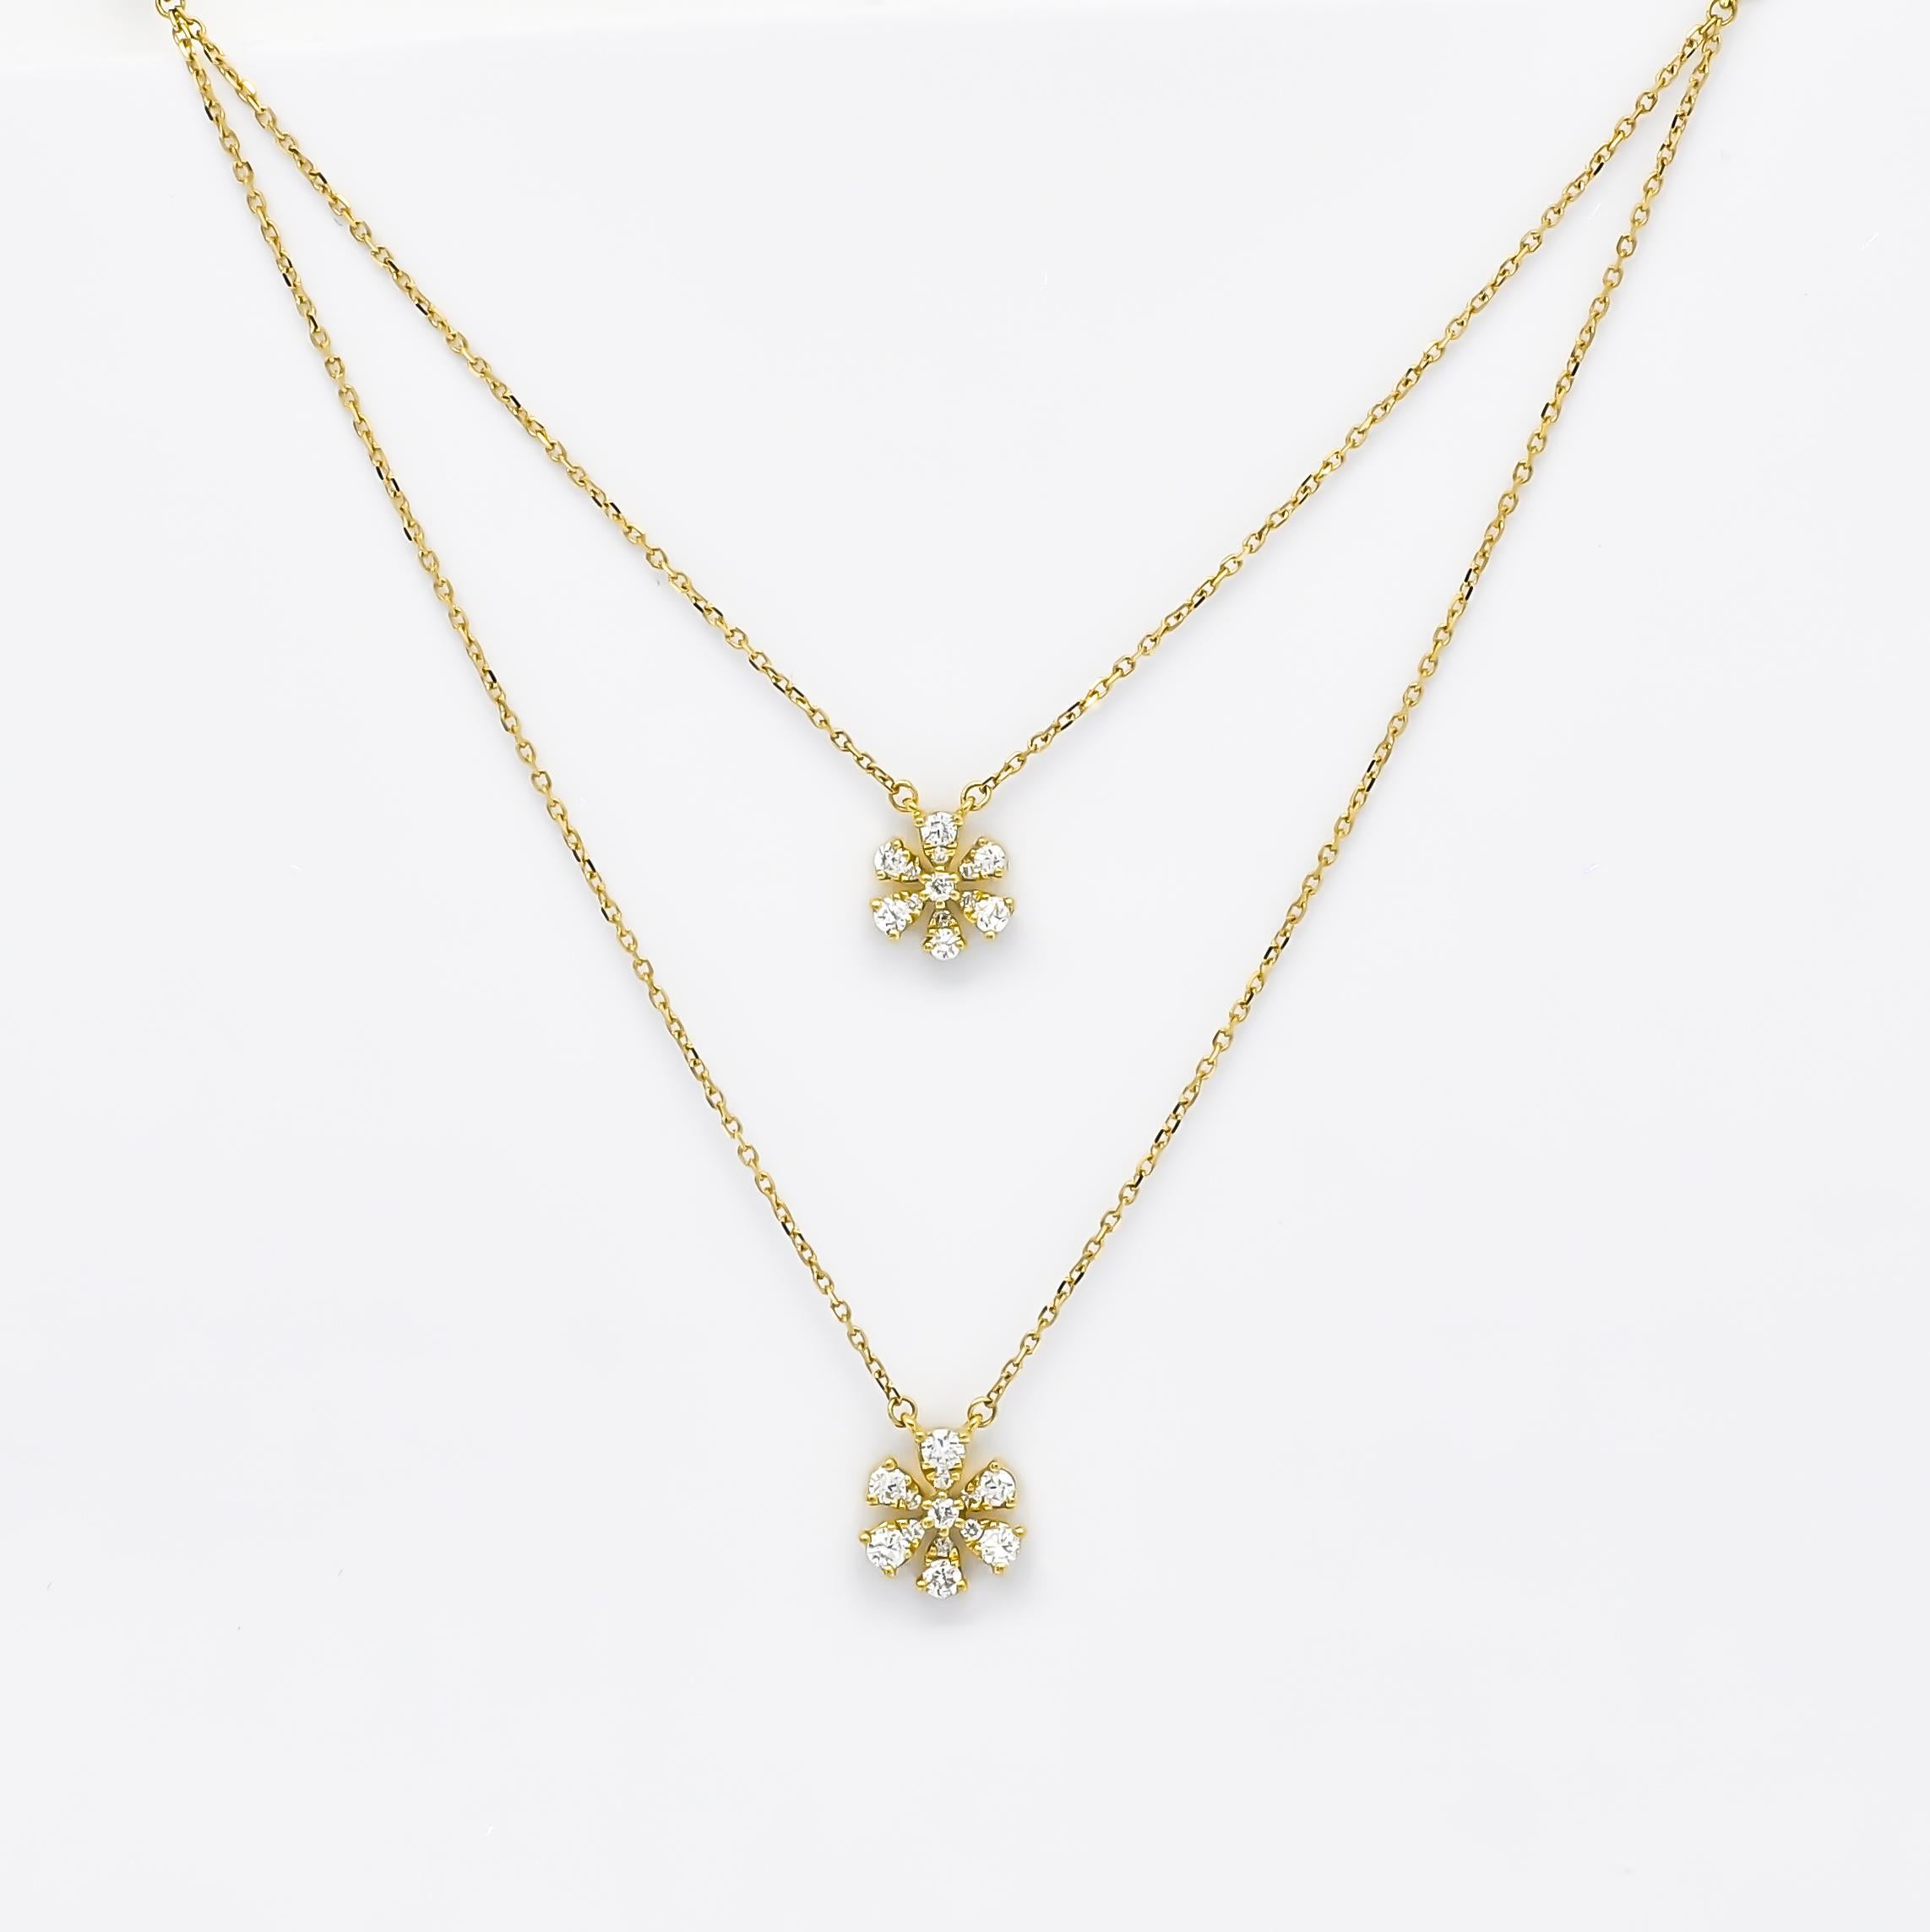 Brilliant Cut Natural Diamond 0.46 carats 18Karat Yellow Gold Flower Pendant Necklace For Sale